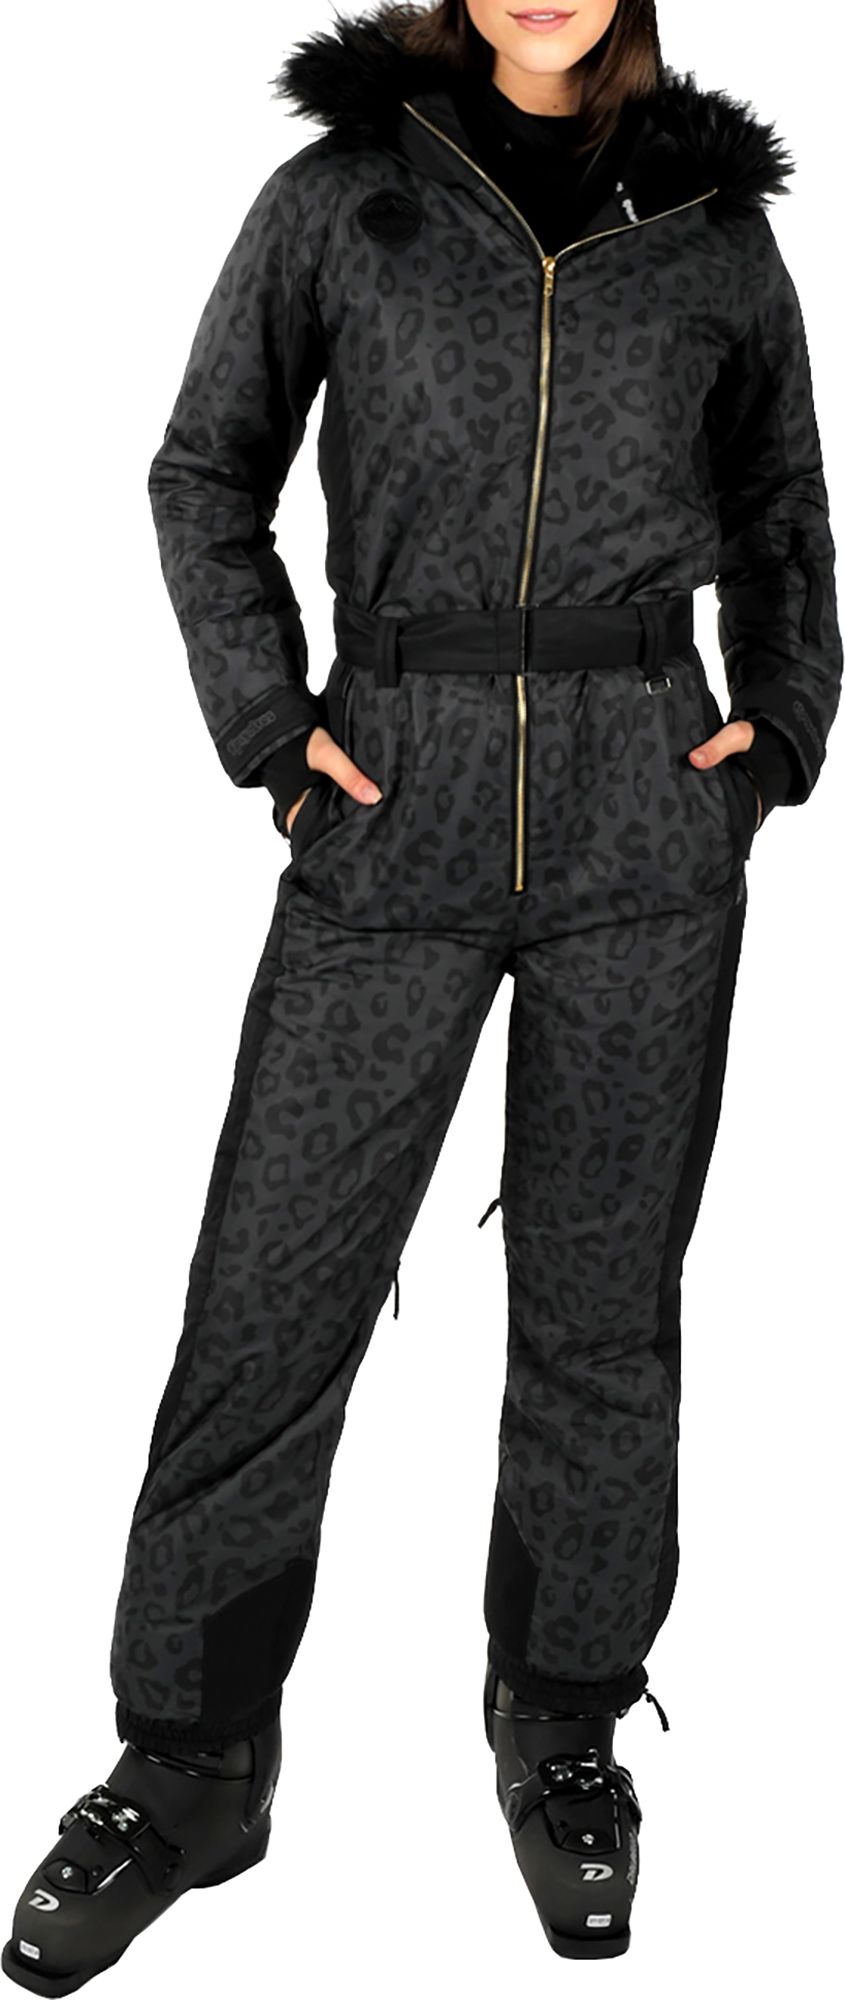 Photos - Ski Wear Leopard Tipsy Elves Women's Midnight  Snow Suit, XS, Black 22DBPWWMDNGHTLPR 